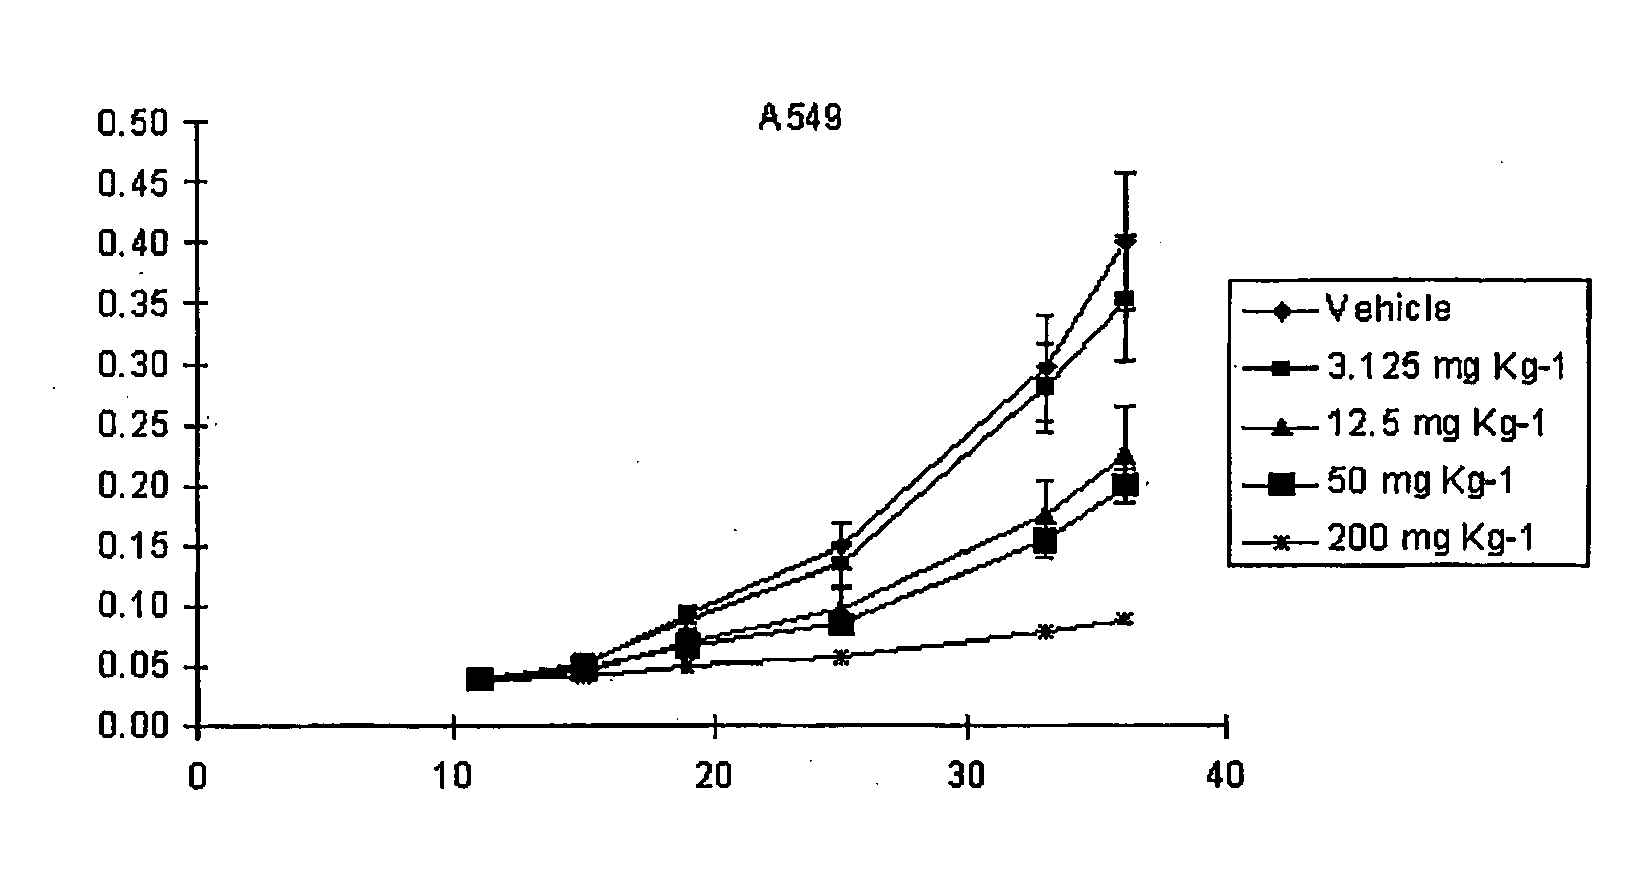 Anti-human trail receptor dr5 monoclonal antibody (ad5-10), method thereof and use of the same